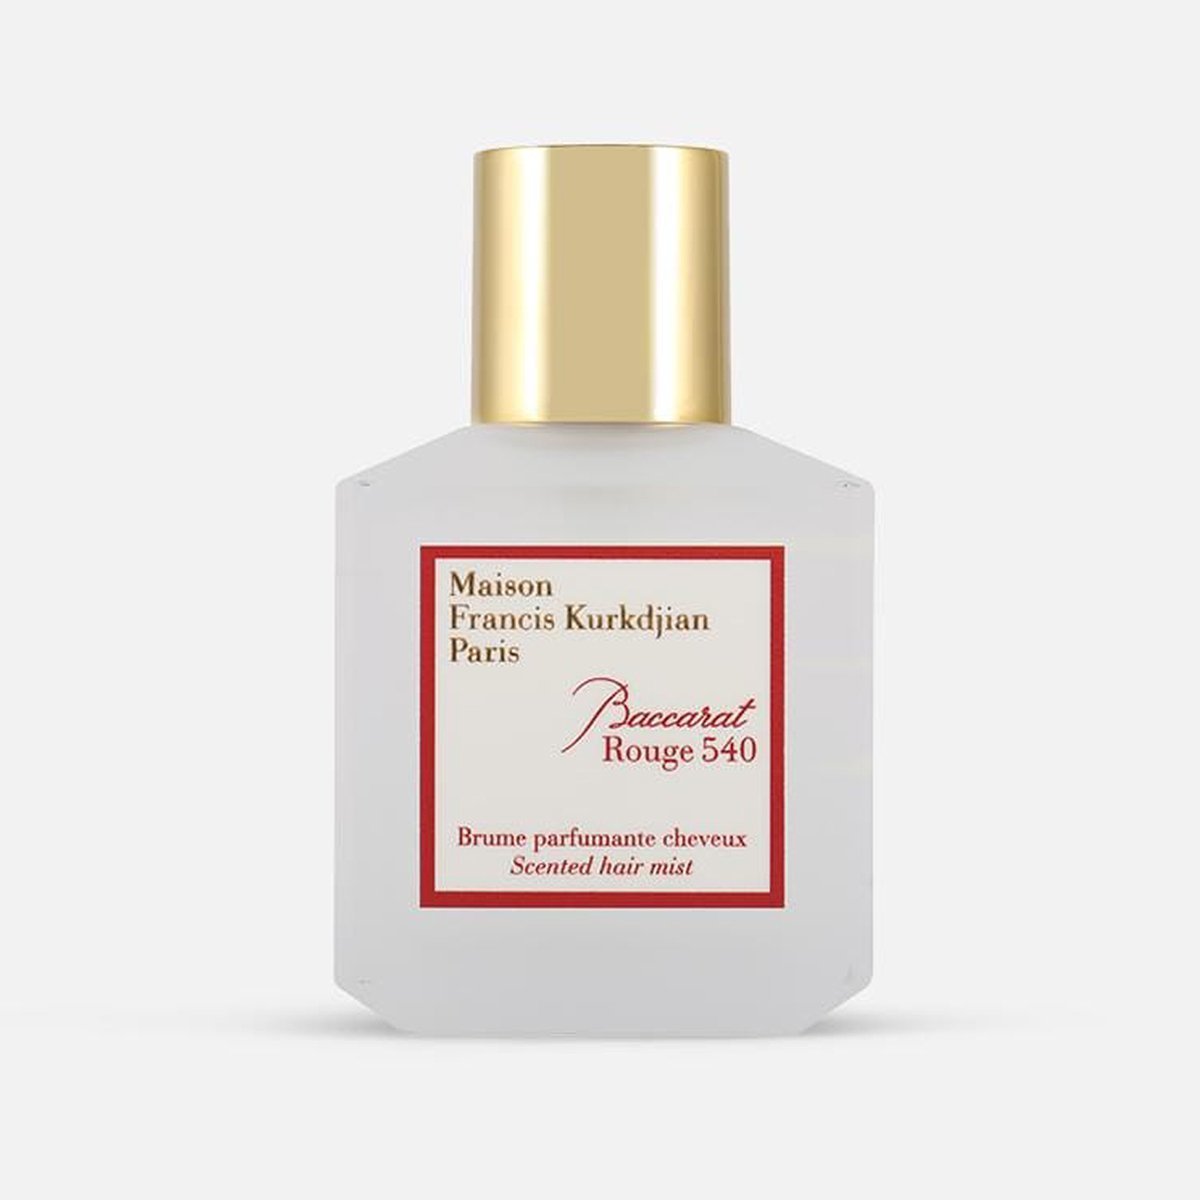 Maison Francis Kurkdjian Baccarat Rouge 540 Hair Mist - My Perfume Shop Australia